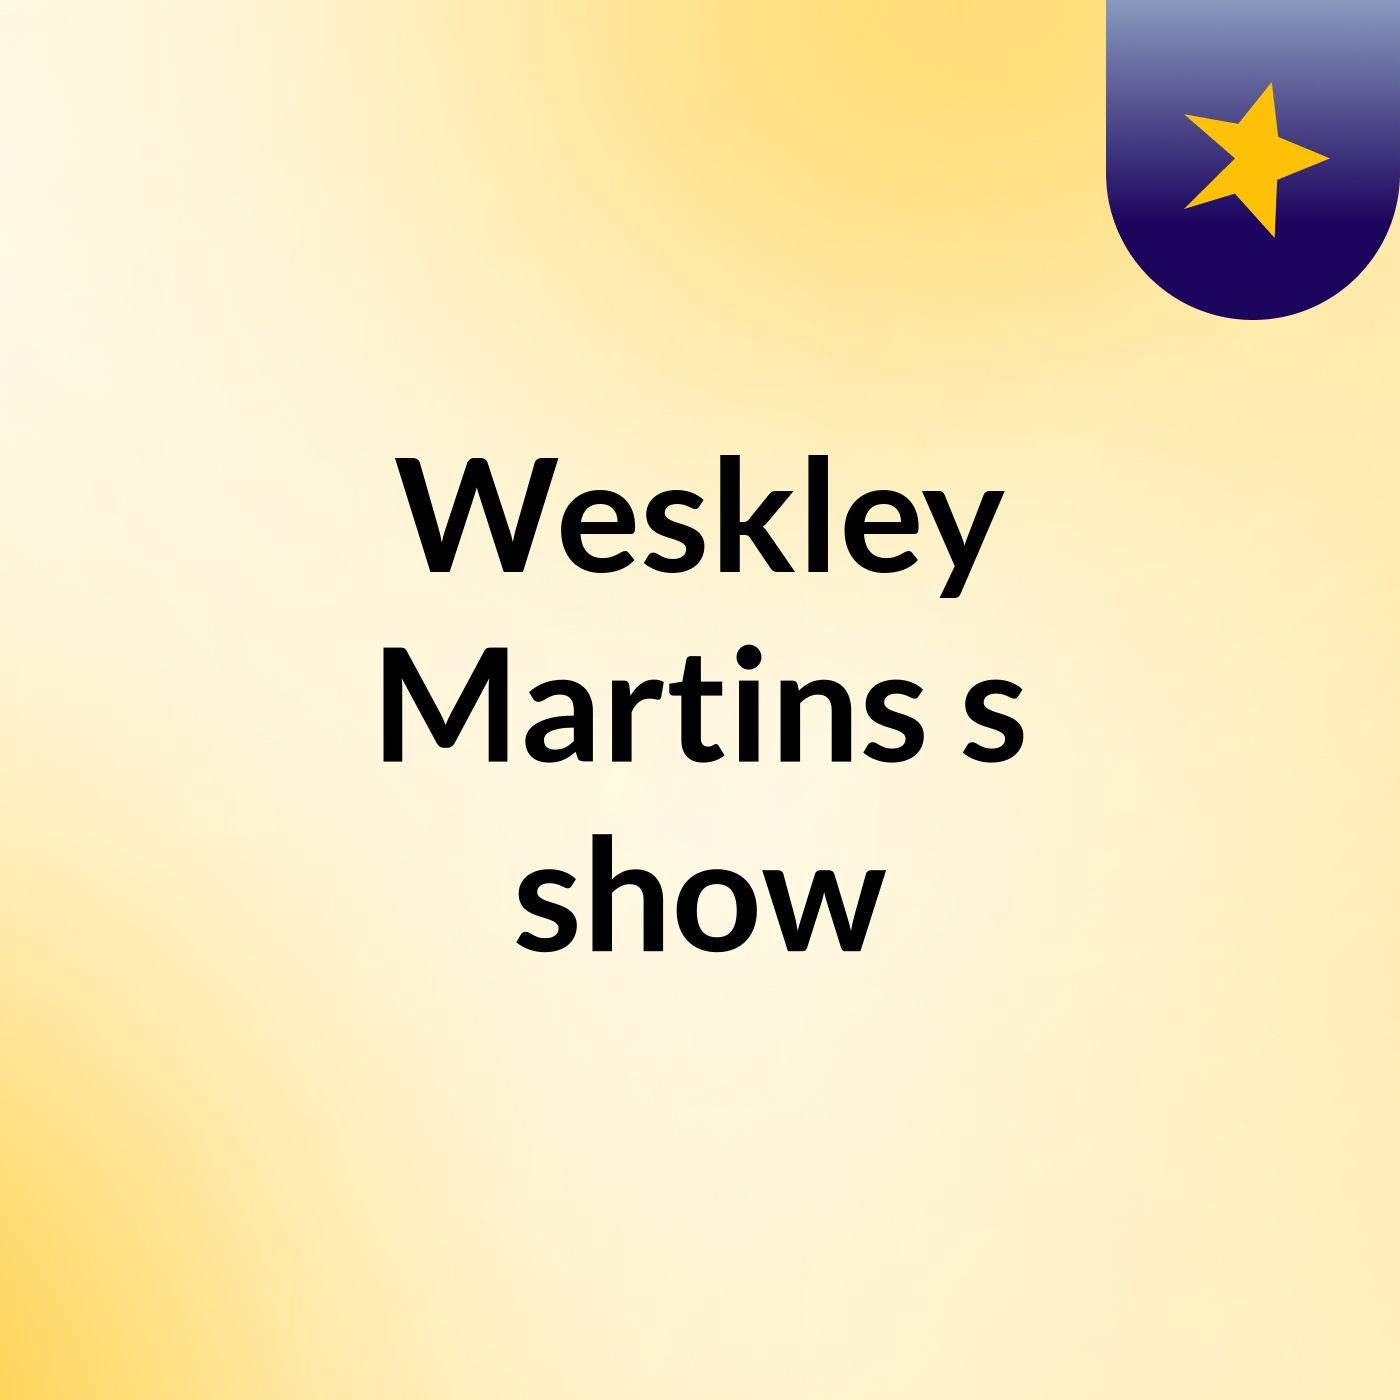 Weskley Martins's show